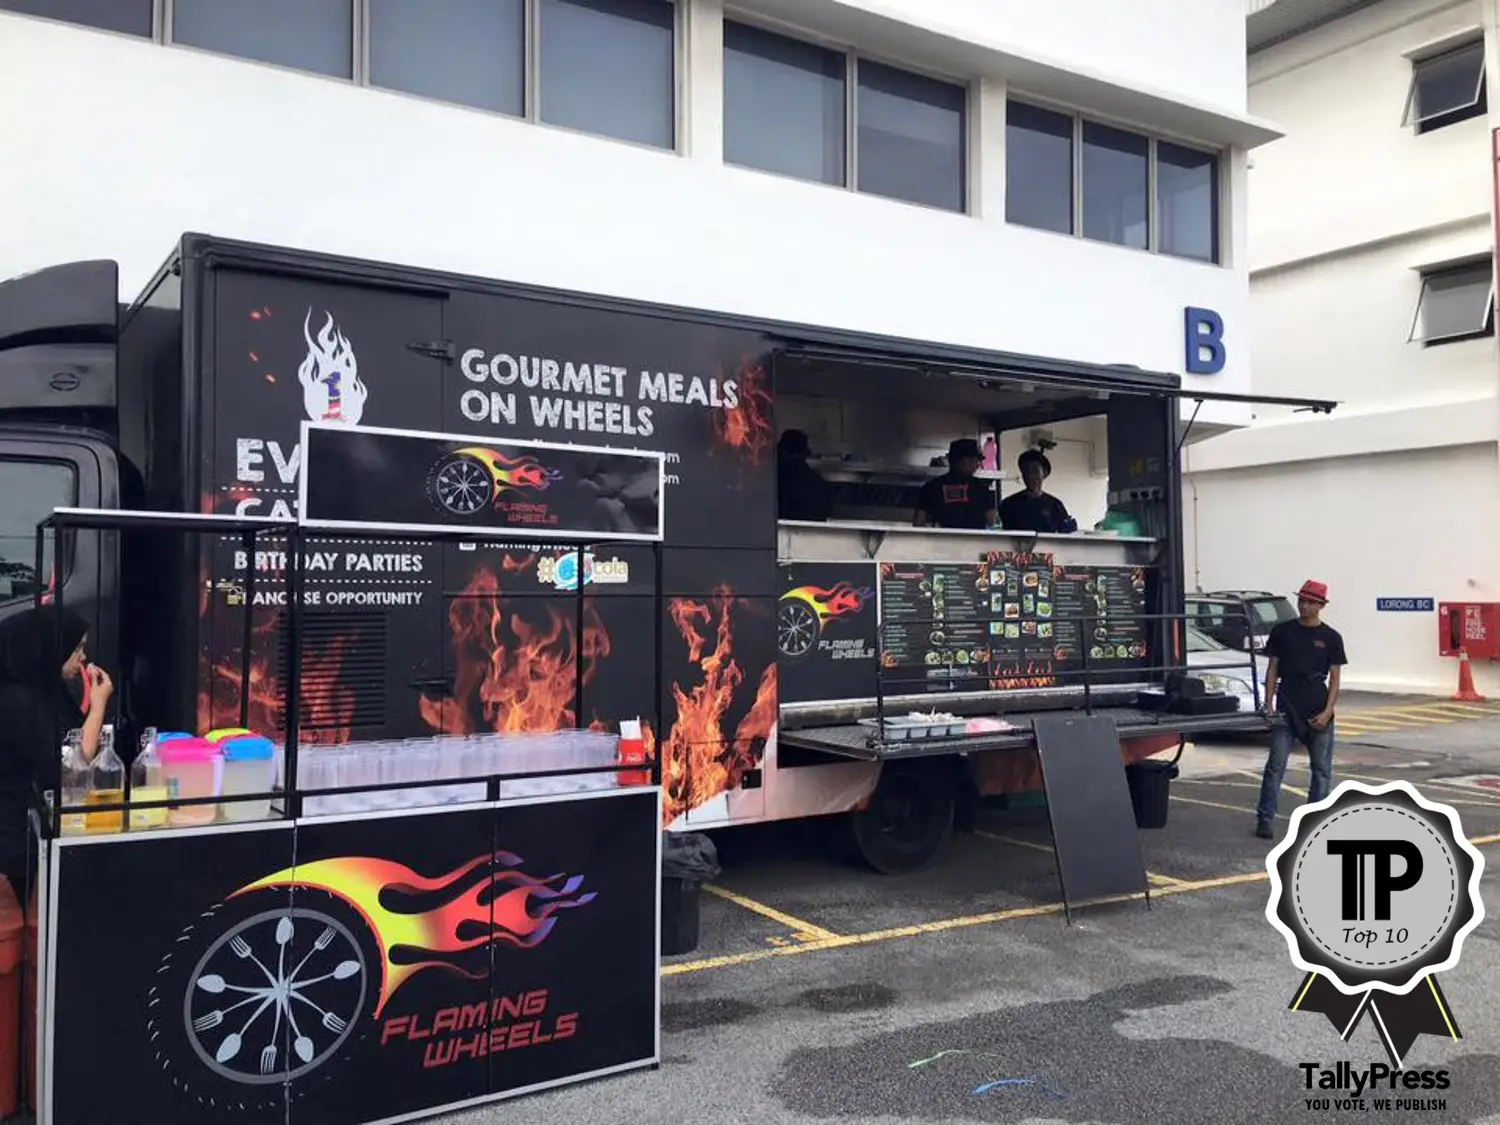 2-flaming-wheels-top-10-trending-food-trucks-in-malaysia-jpg